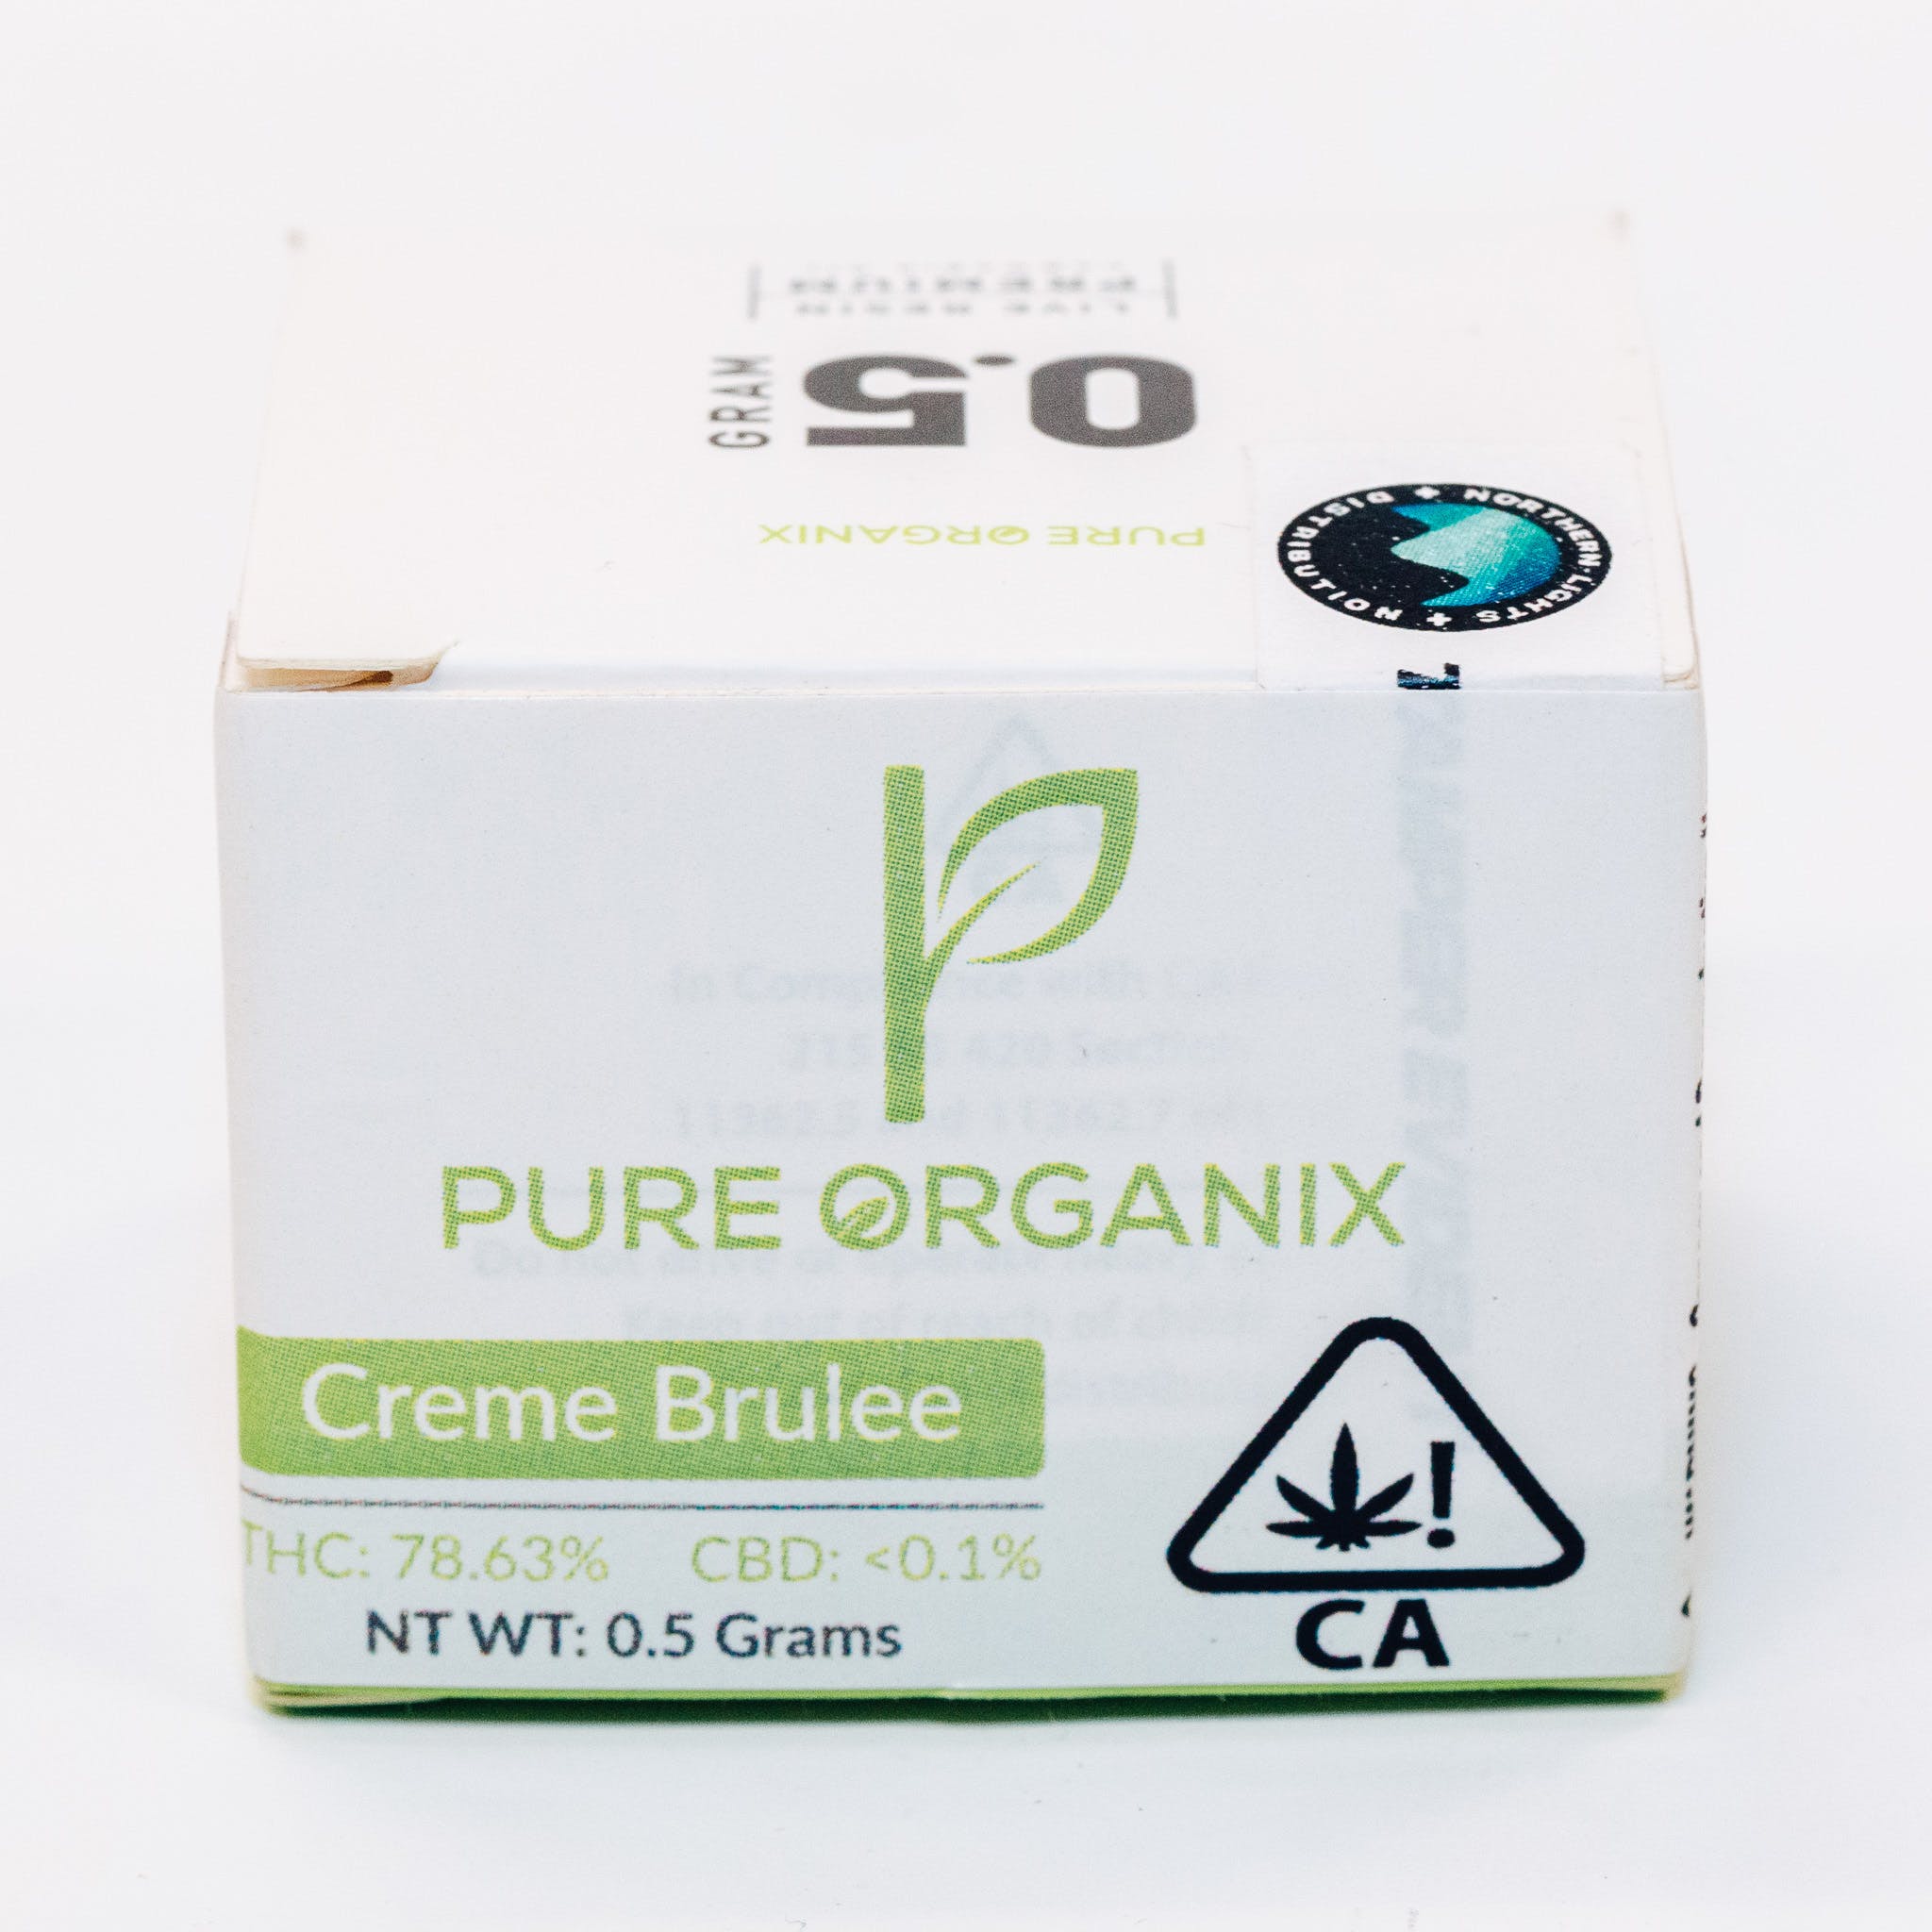 PURE ORGANIX Creme Brulee .5g Live Resin